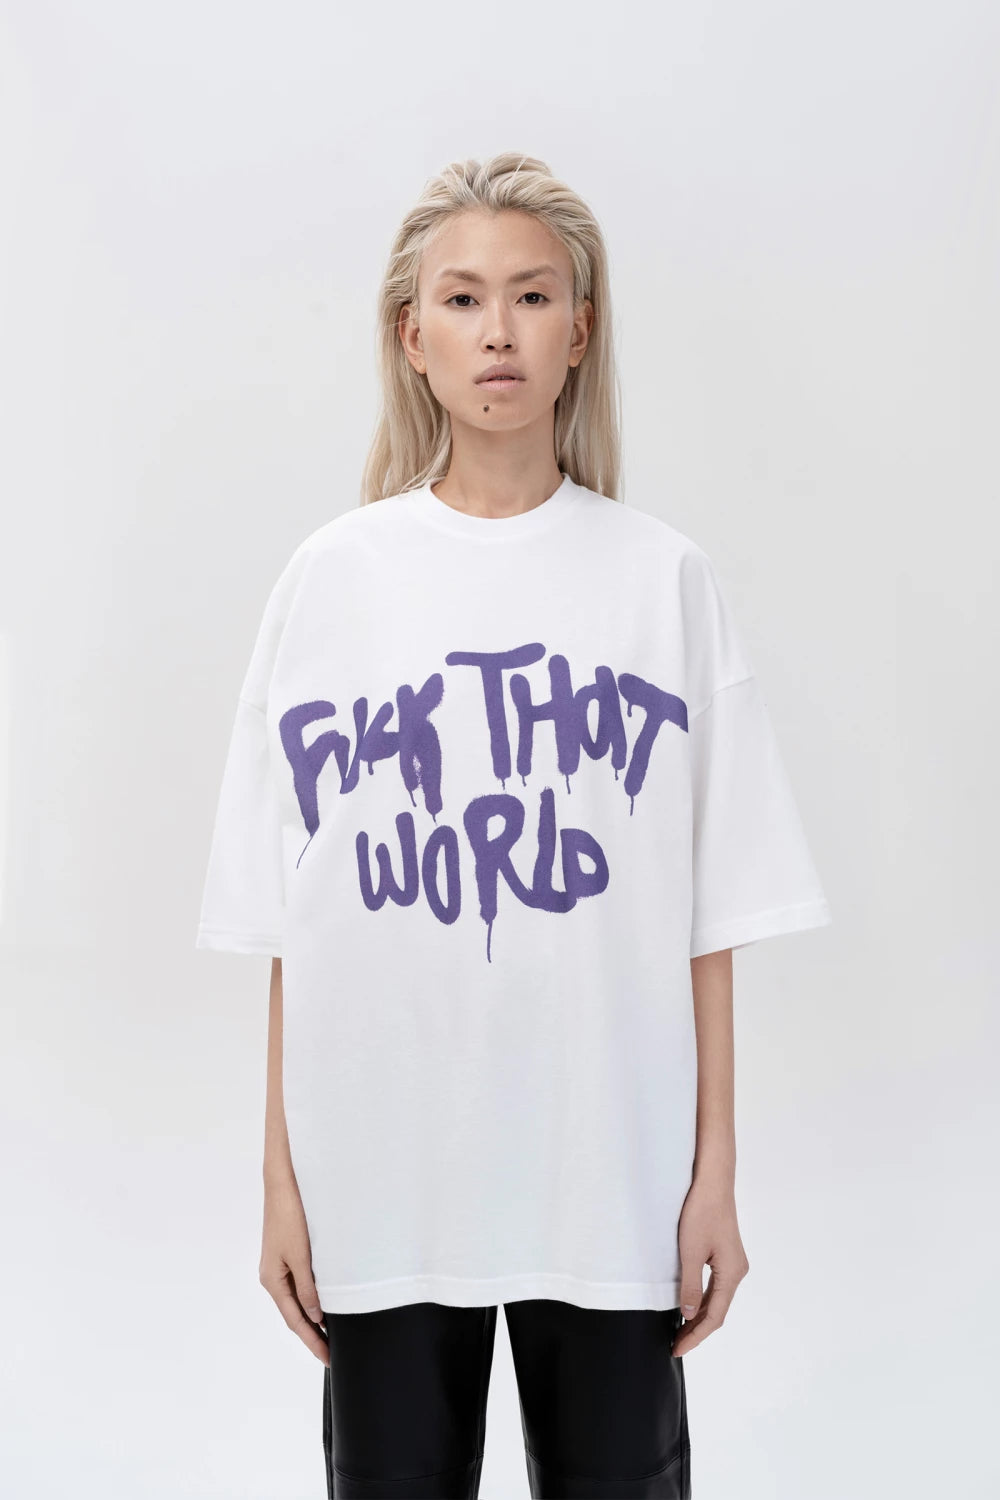 “Fuck That World“ White T-Shirt